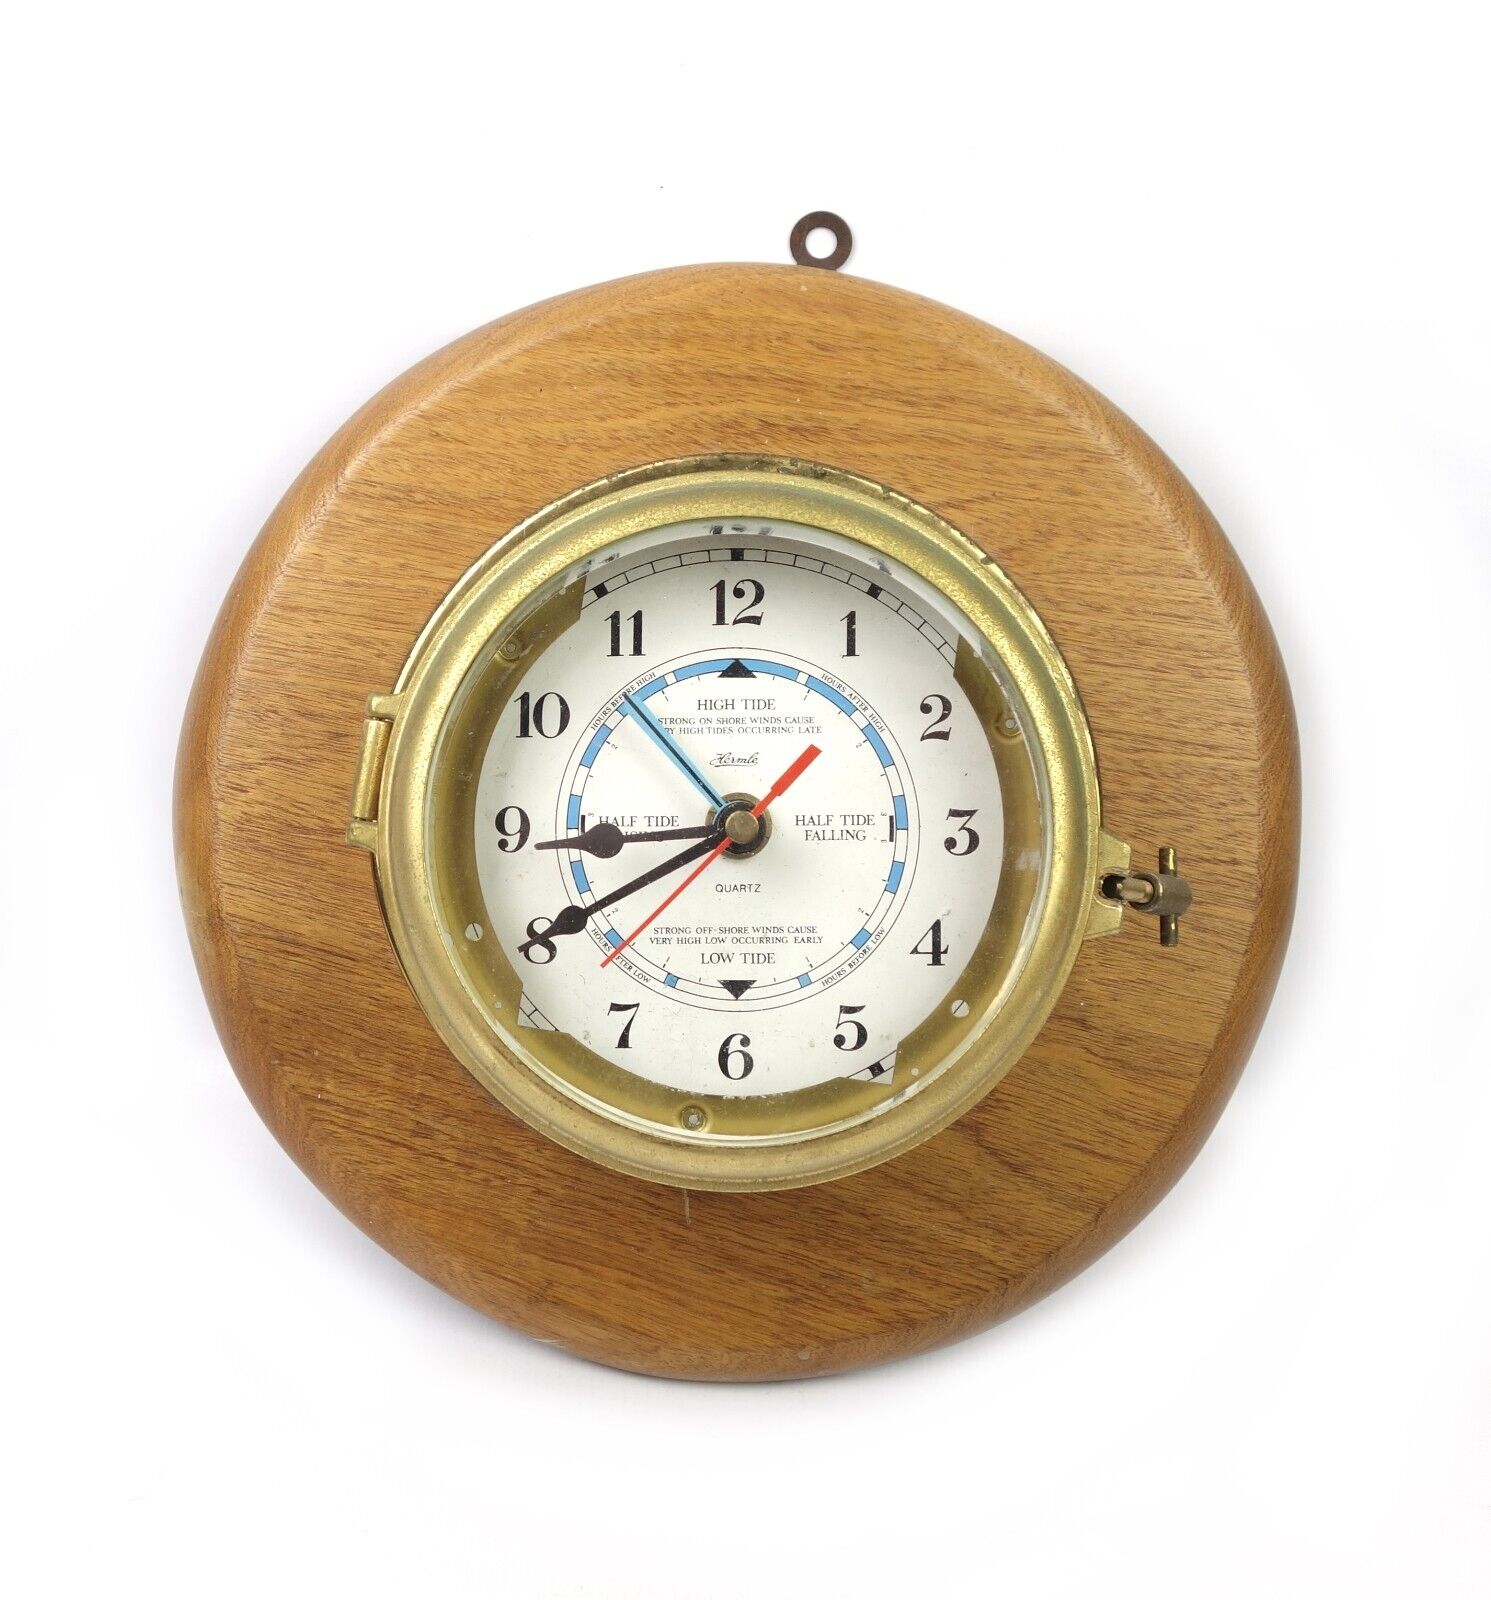 Vintage Hermle Quartz Nautical Captain’s Tide Clock - Tested & Working